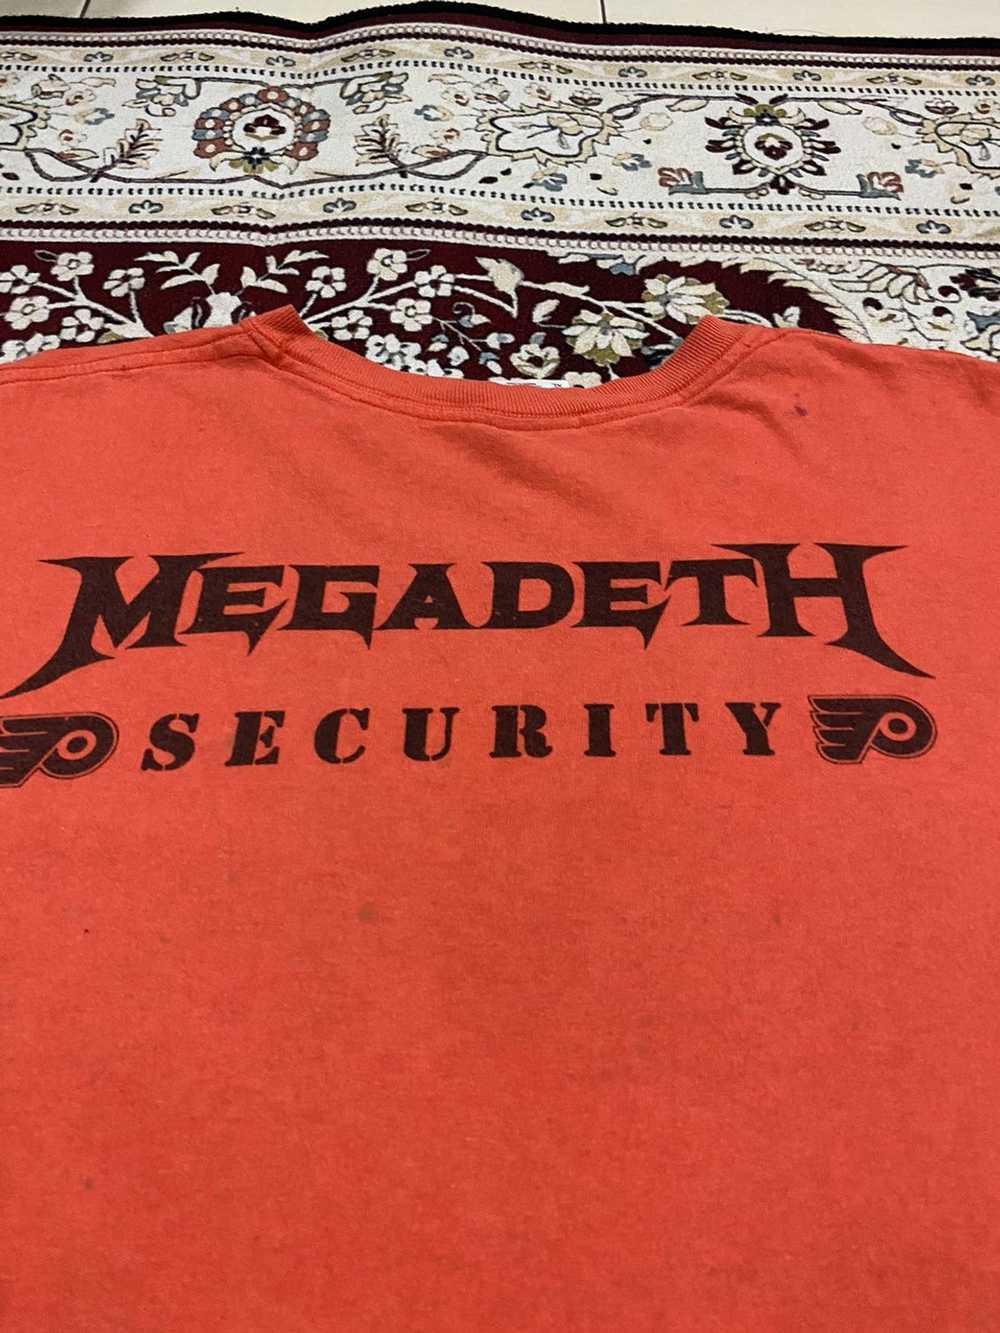 Band Tees × Megadeth Megadeth security shirt - image 11